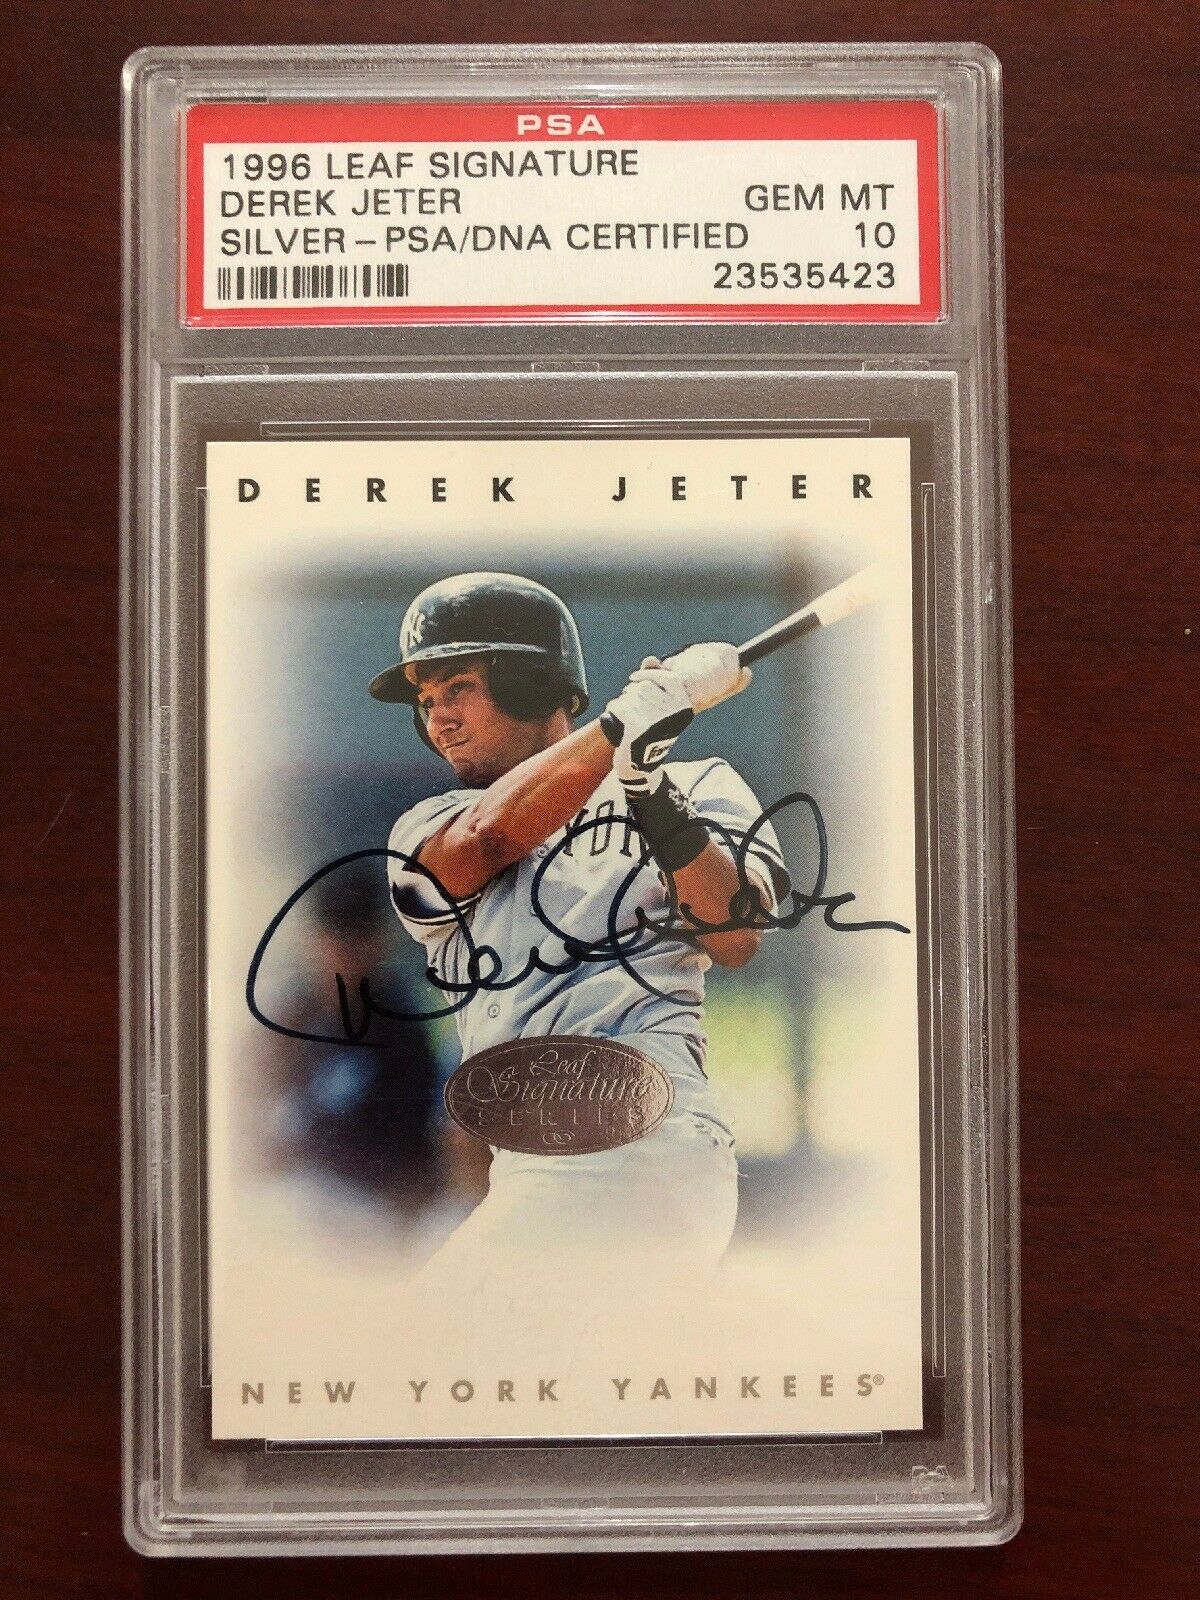 Derek Jeter's Top 15 Baseball Cards of All-Time - Cardboard Picasso